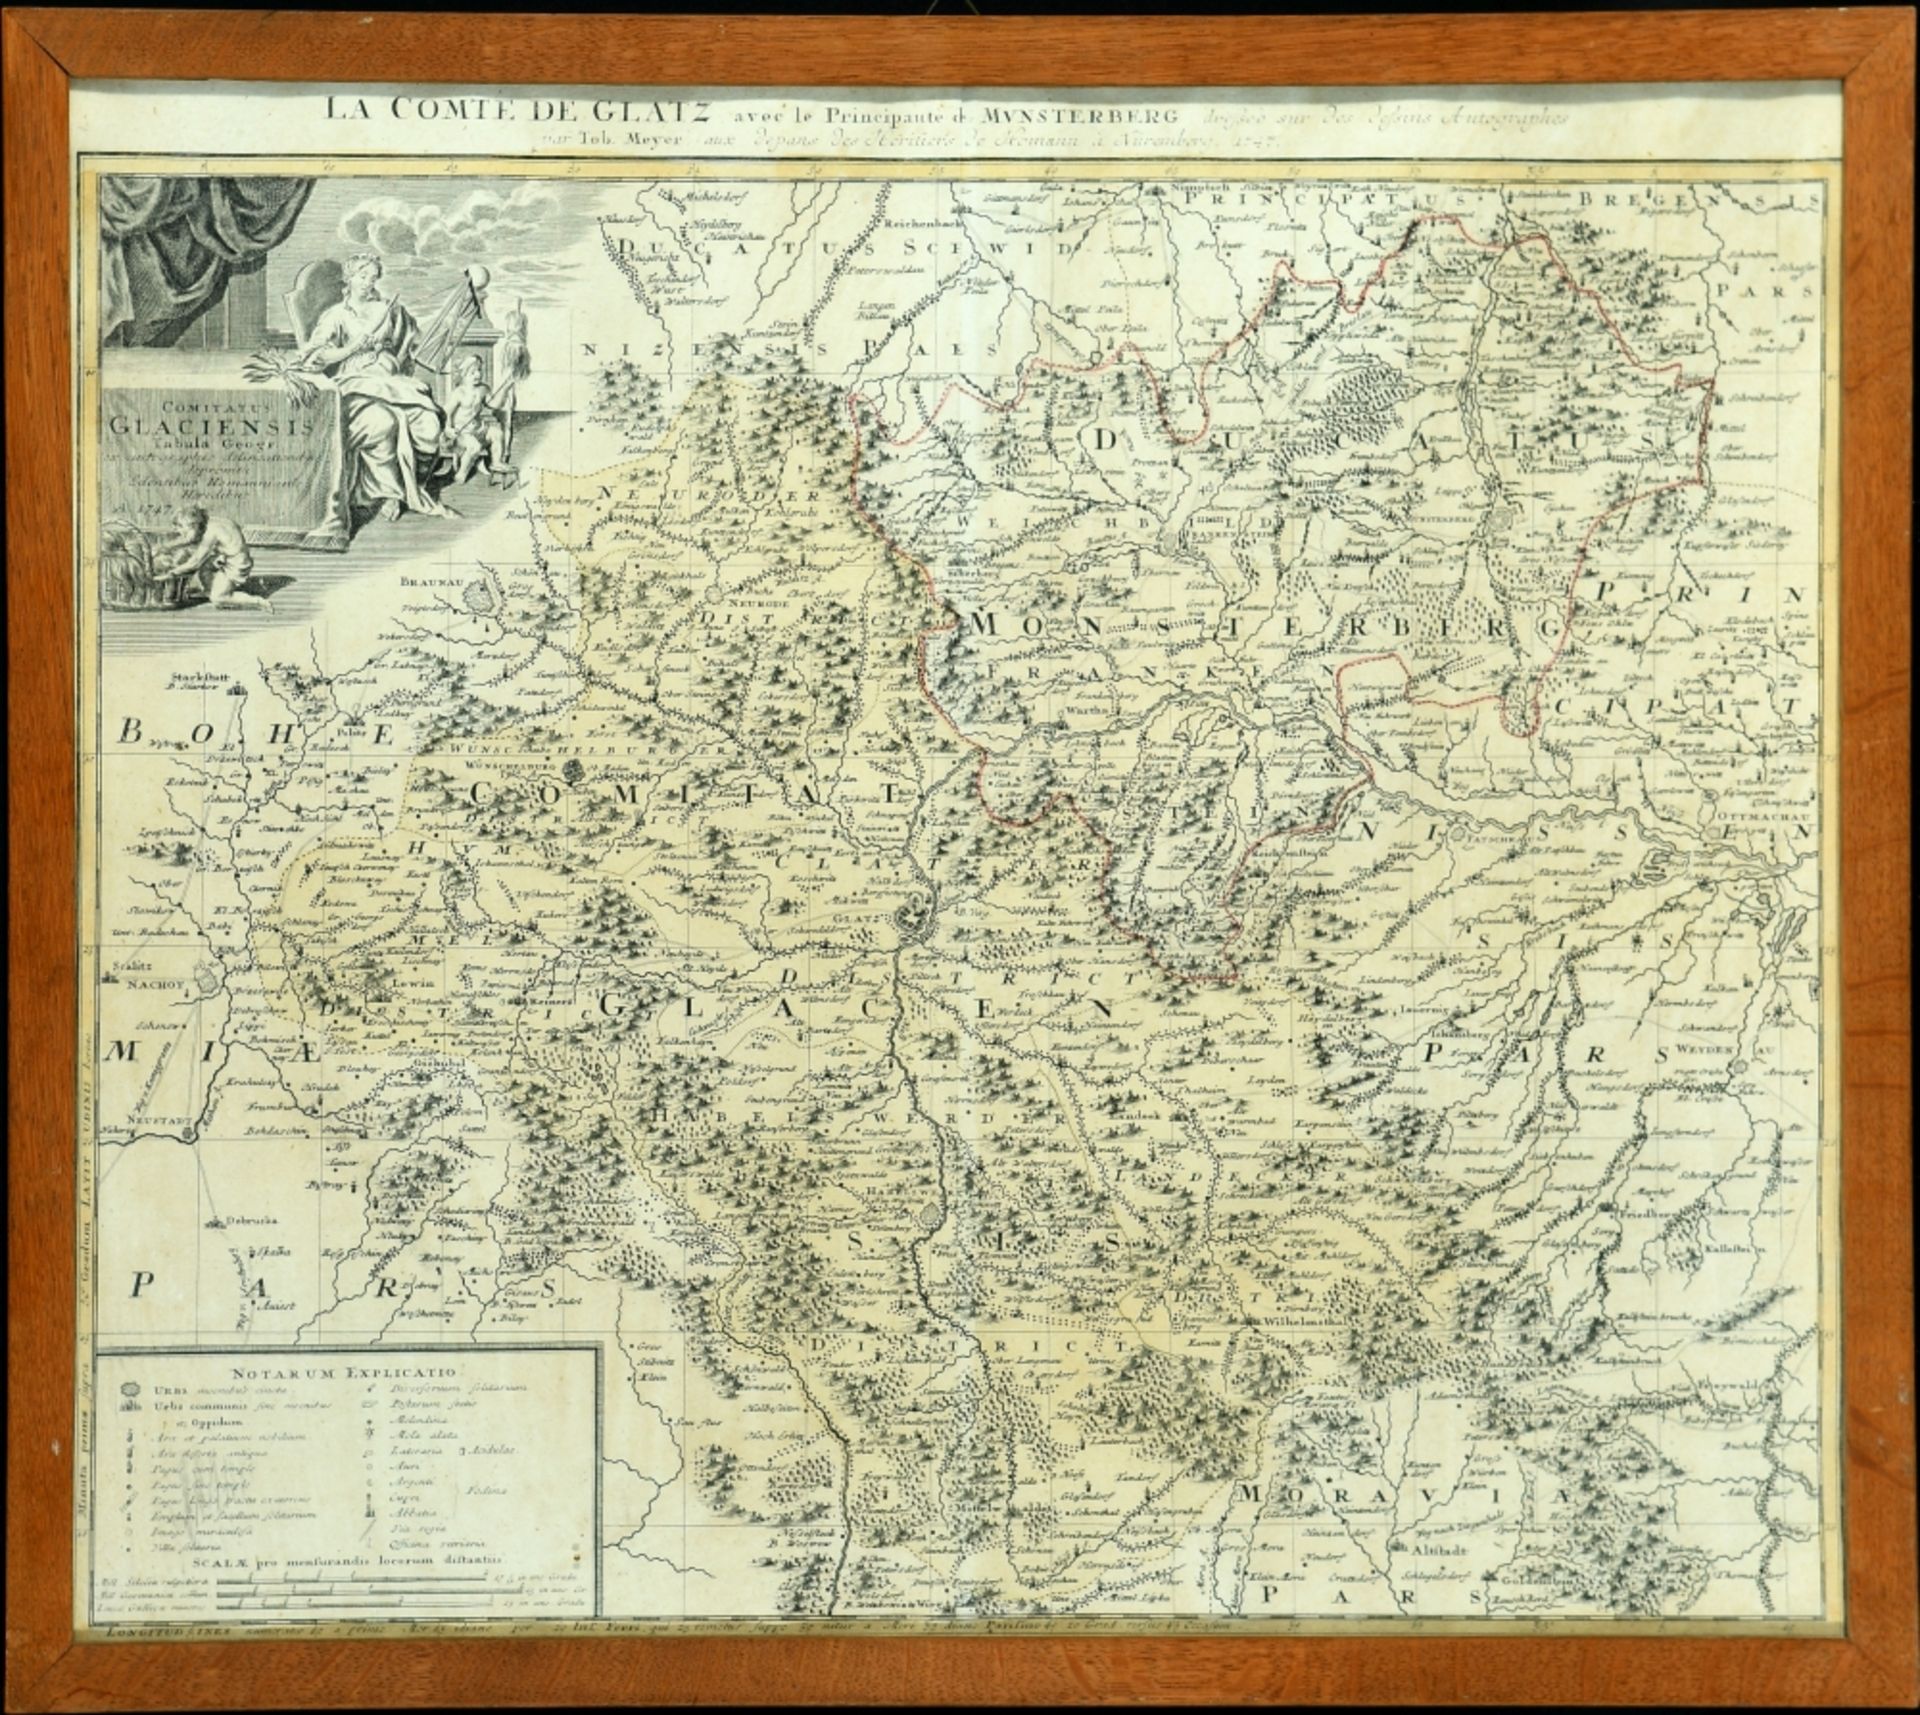 Landkarte "La comte de Glatz avec le Principaute de Munsterberg"